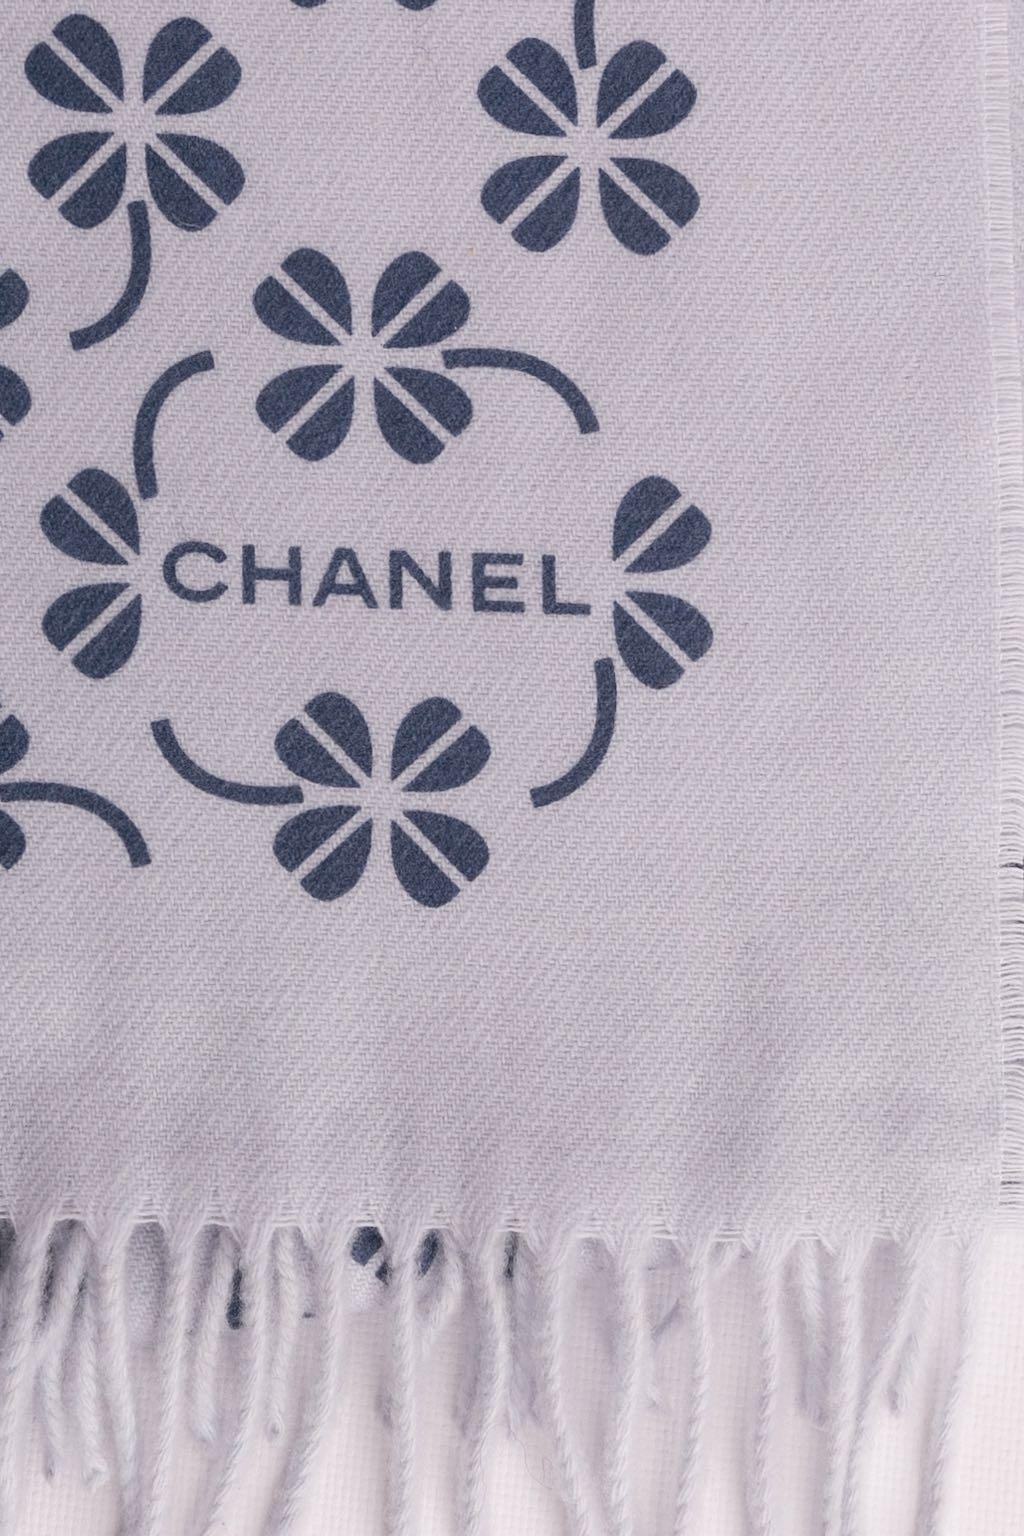 Women's or Men's Chanel Cashmere Stole